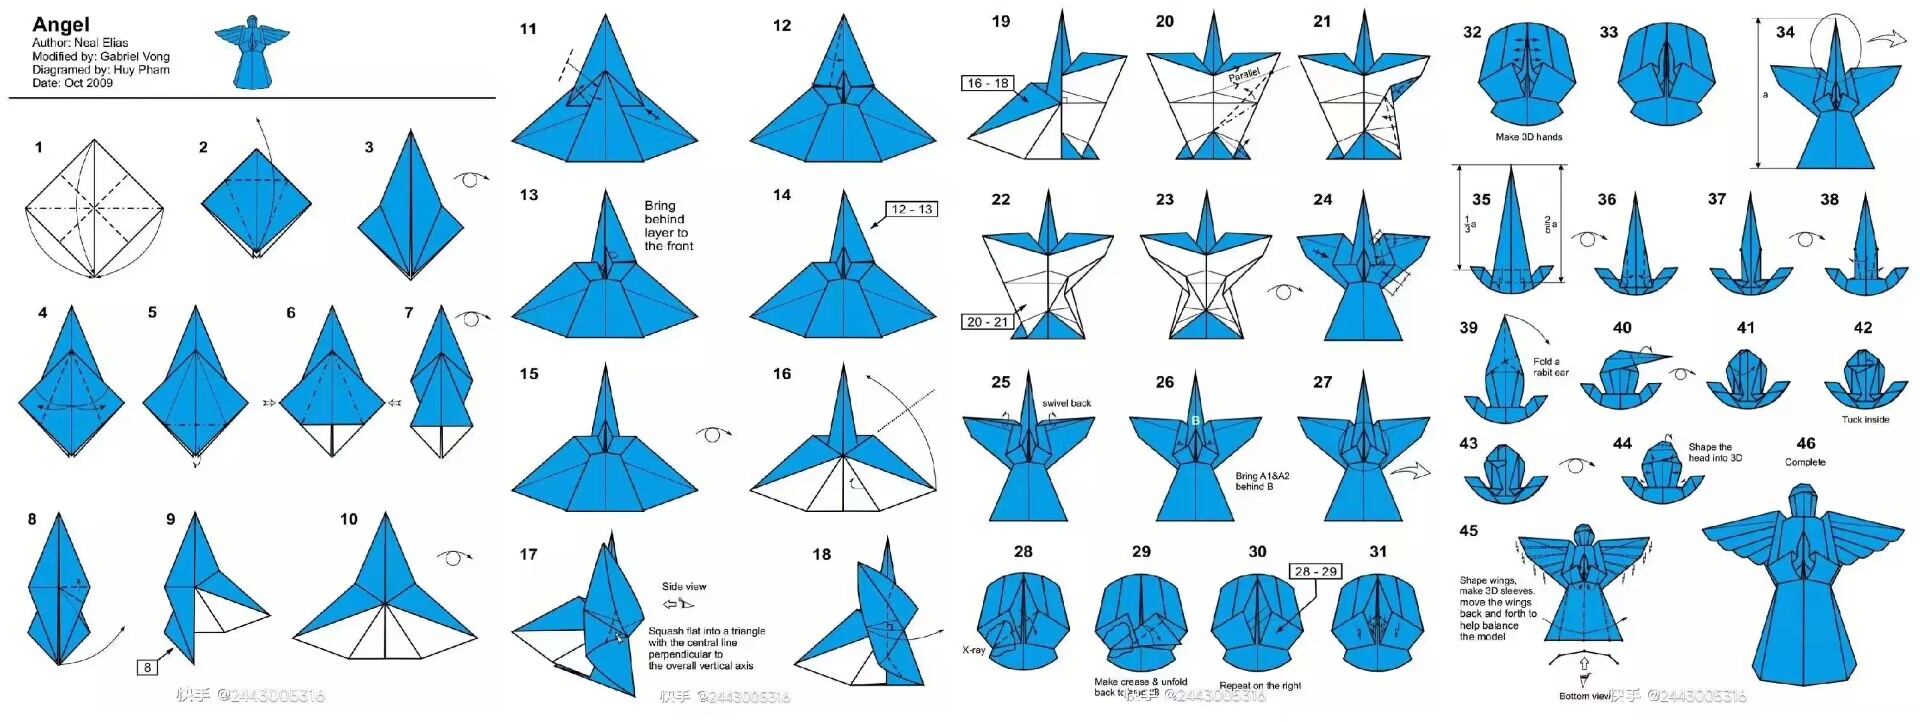 angle-origami.jpg